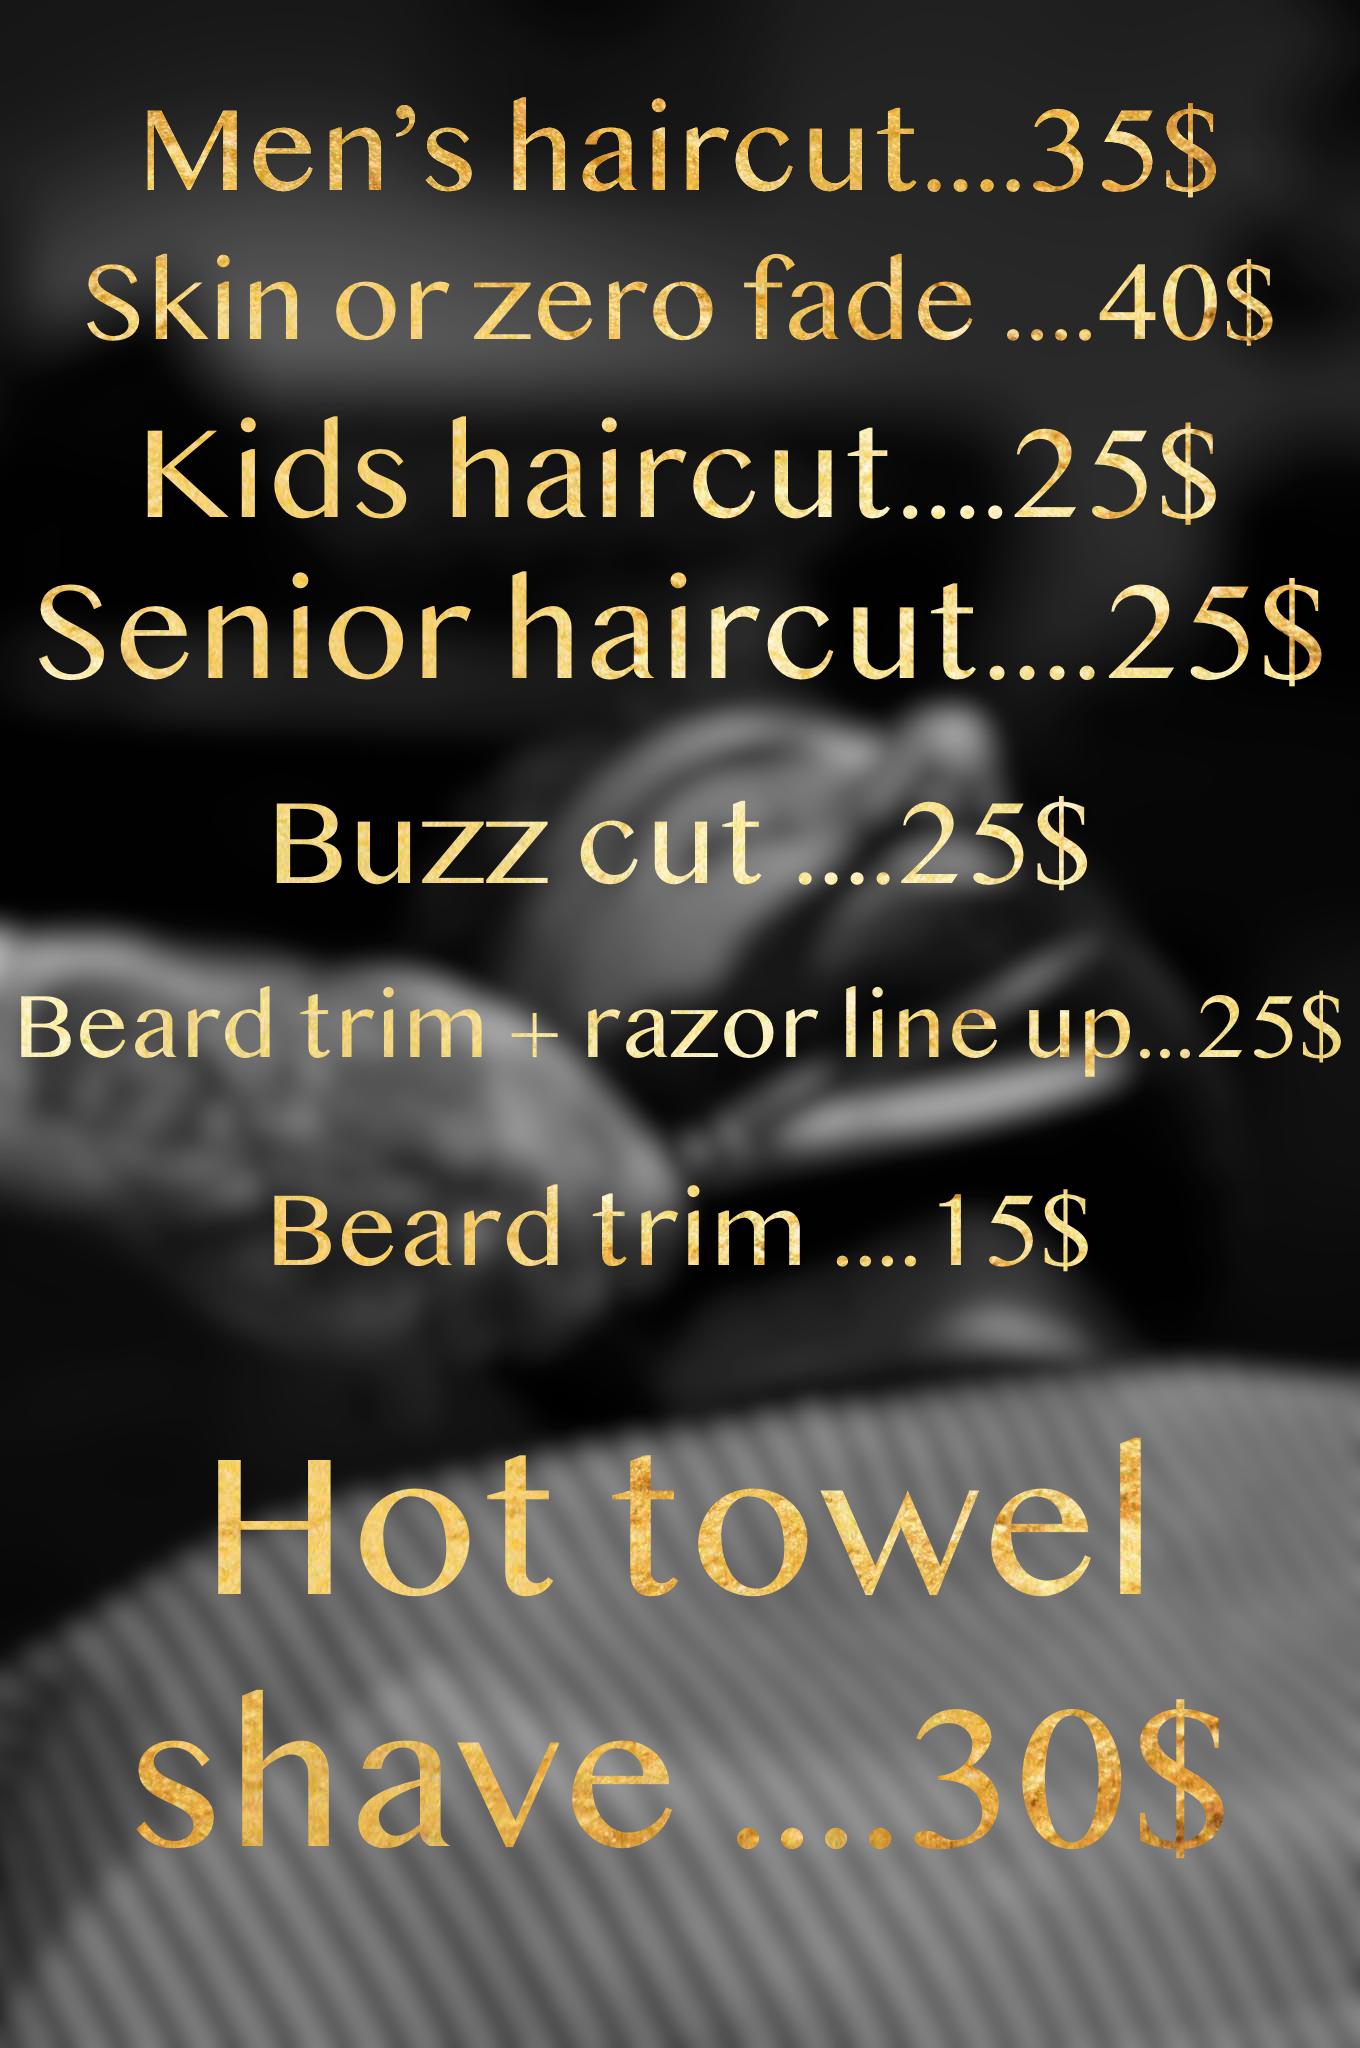 Moustache the barber cave | hair care | 221d Unley Rd, Unley SA 5061, Australia | 0882718517 OR +61 8 8271 8517